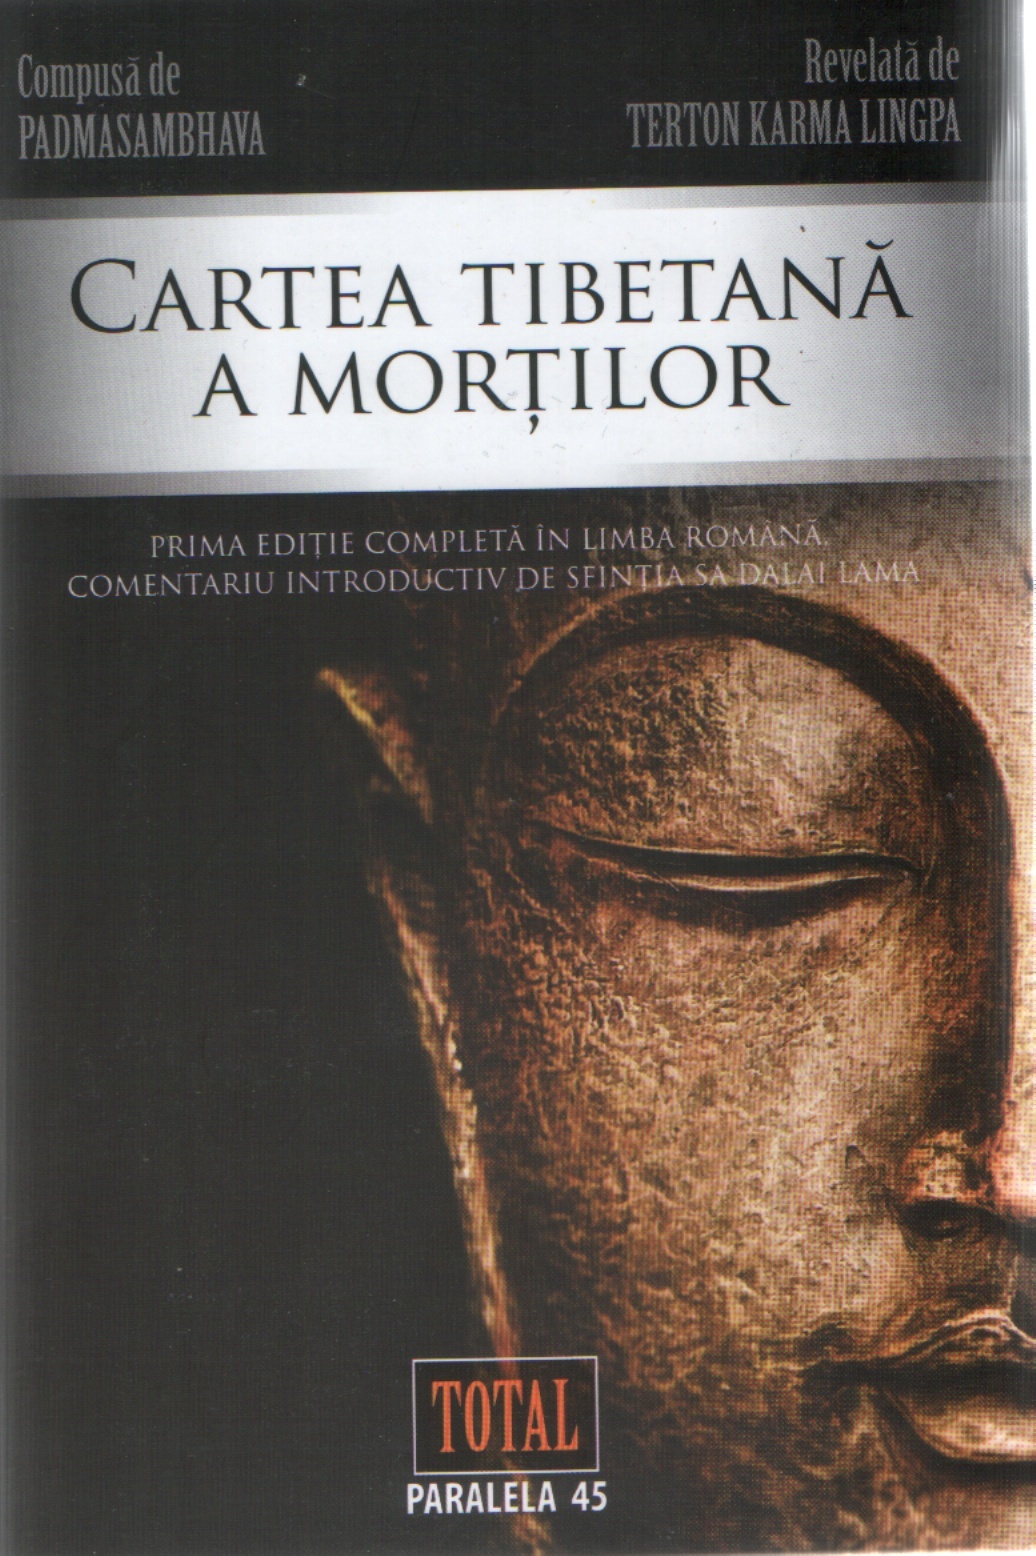 cartea tibetana a vietii si a mortii pdf writer